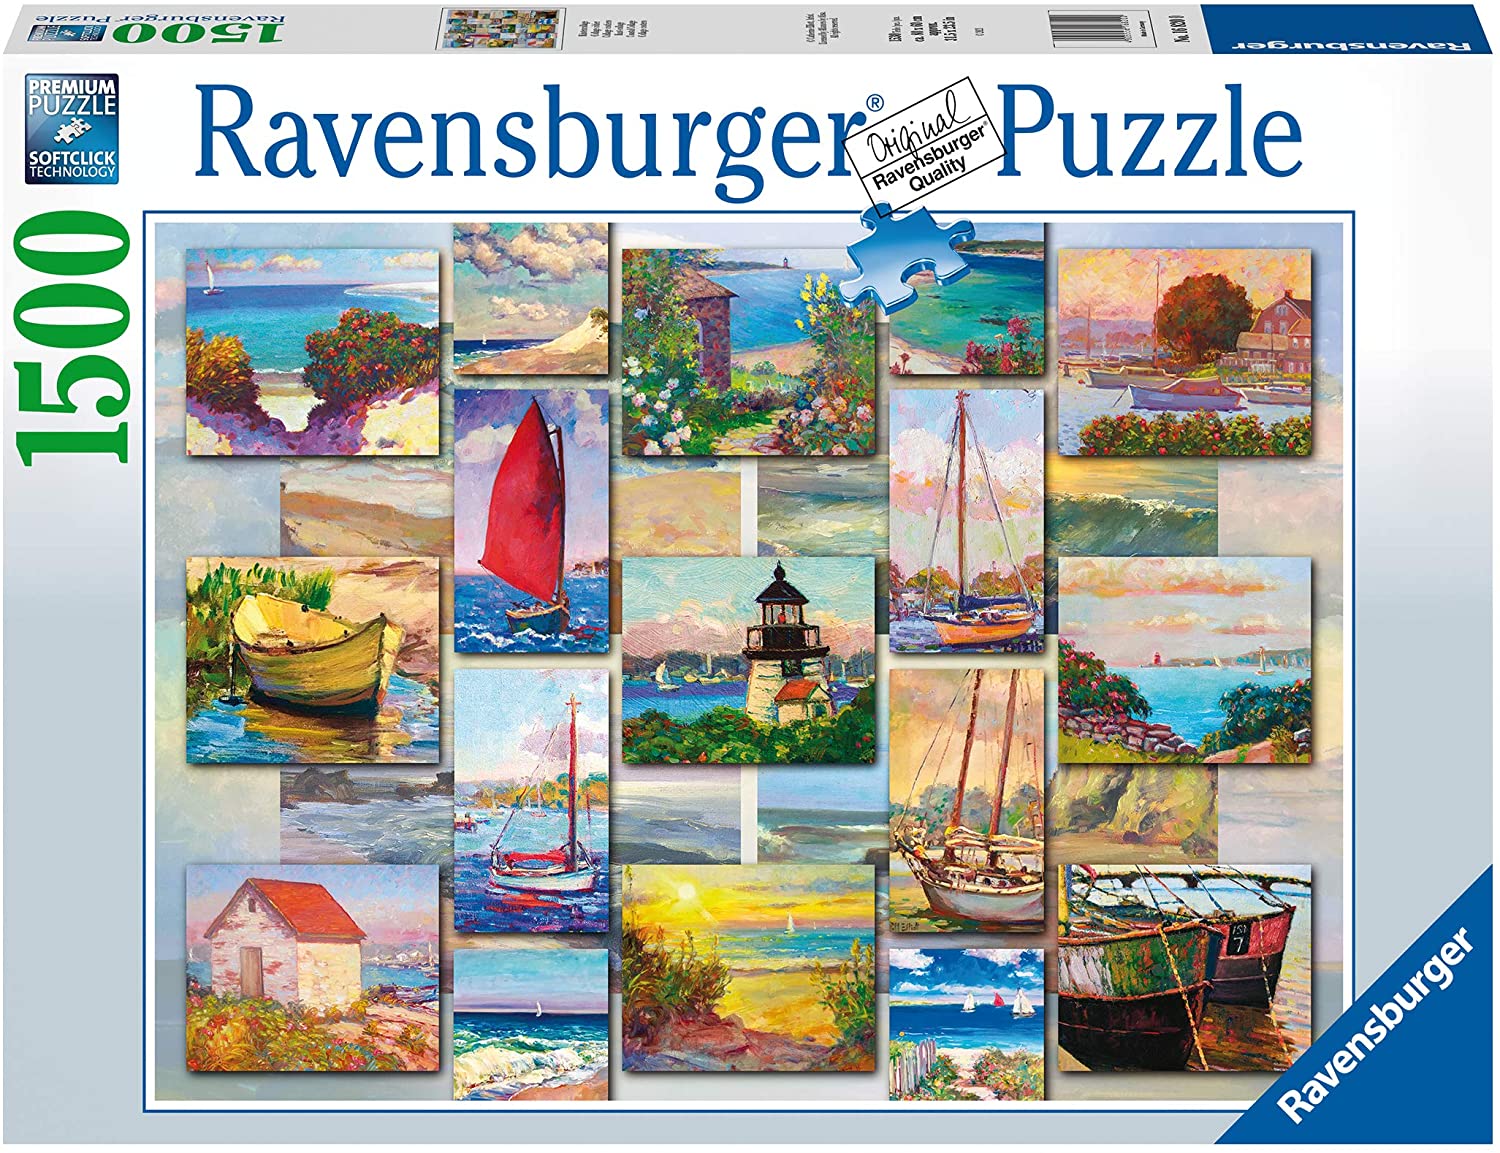 Ravensburger Coastal Collage 1500 Piece Jigsaw